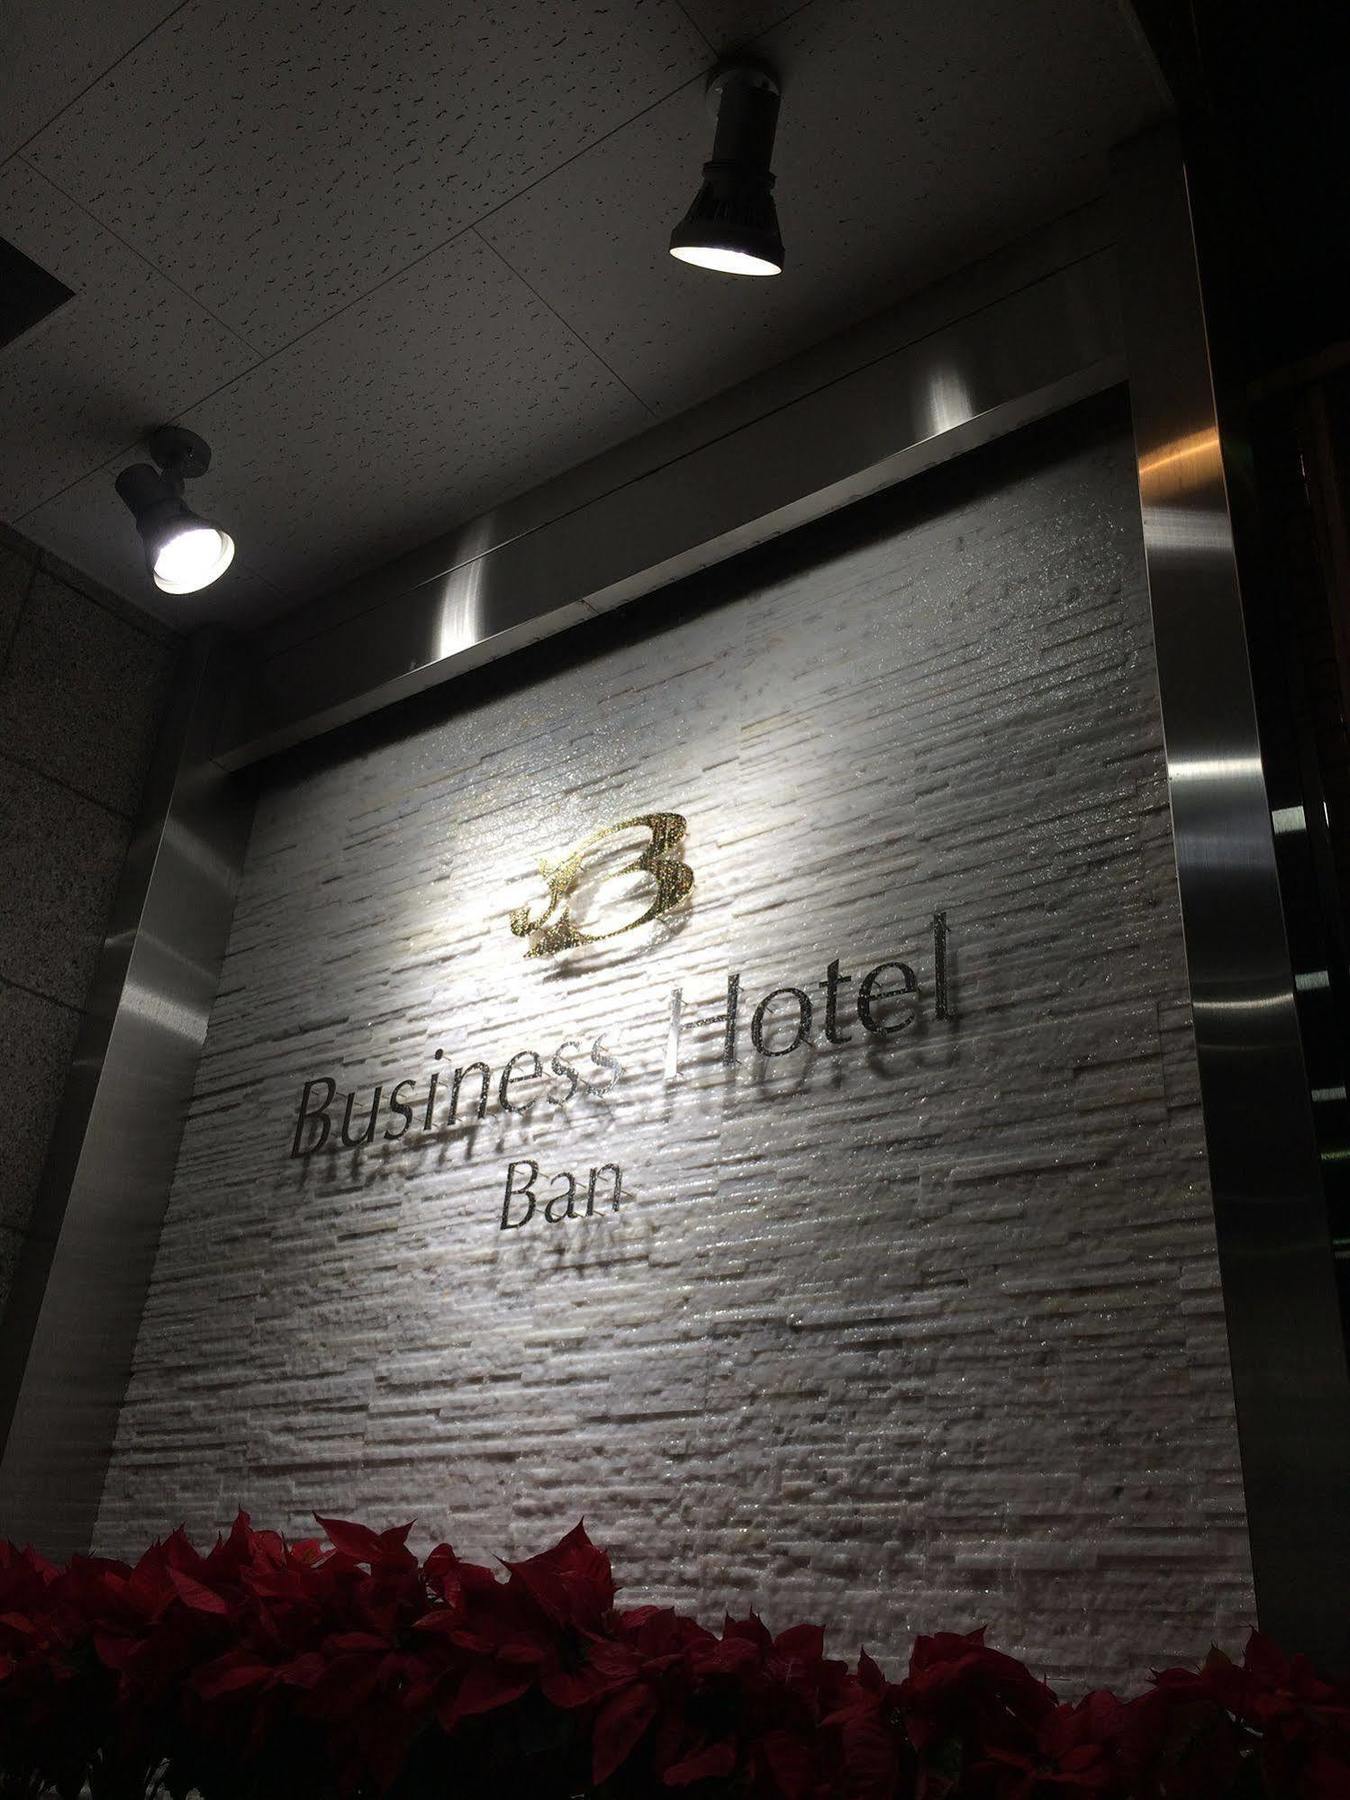 Business Hotel Ban Τόκιο Εξωτερικό φωτογραφία